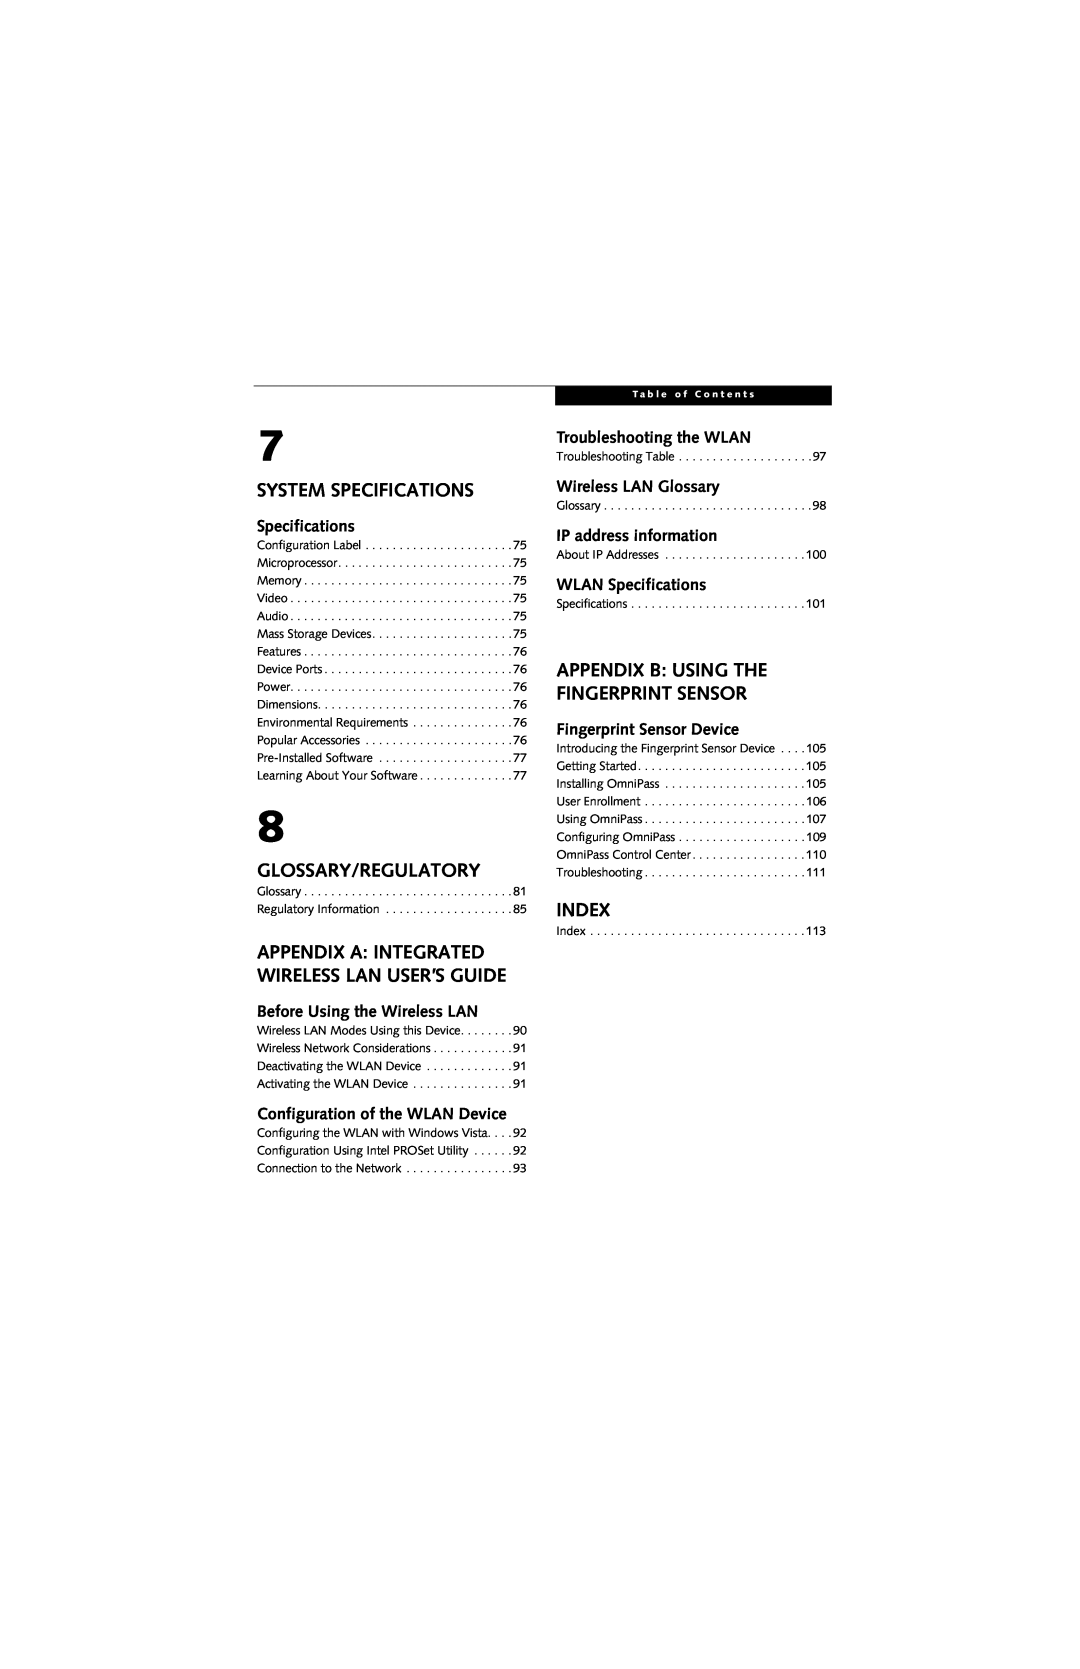 Fujitsu N6420 manual System Specifications, Glossary/Regulatory, Index, Appendix B Using The Fingerprint Sensor 